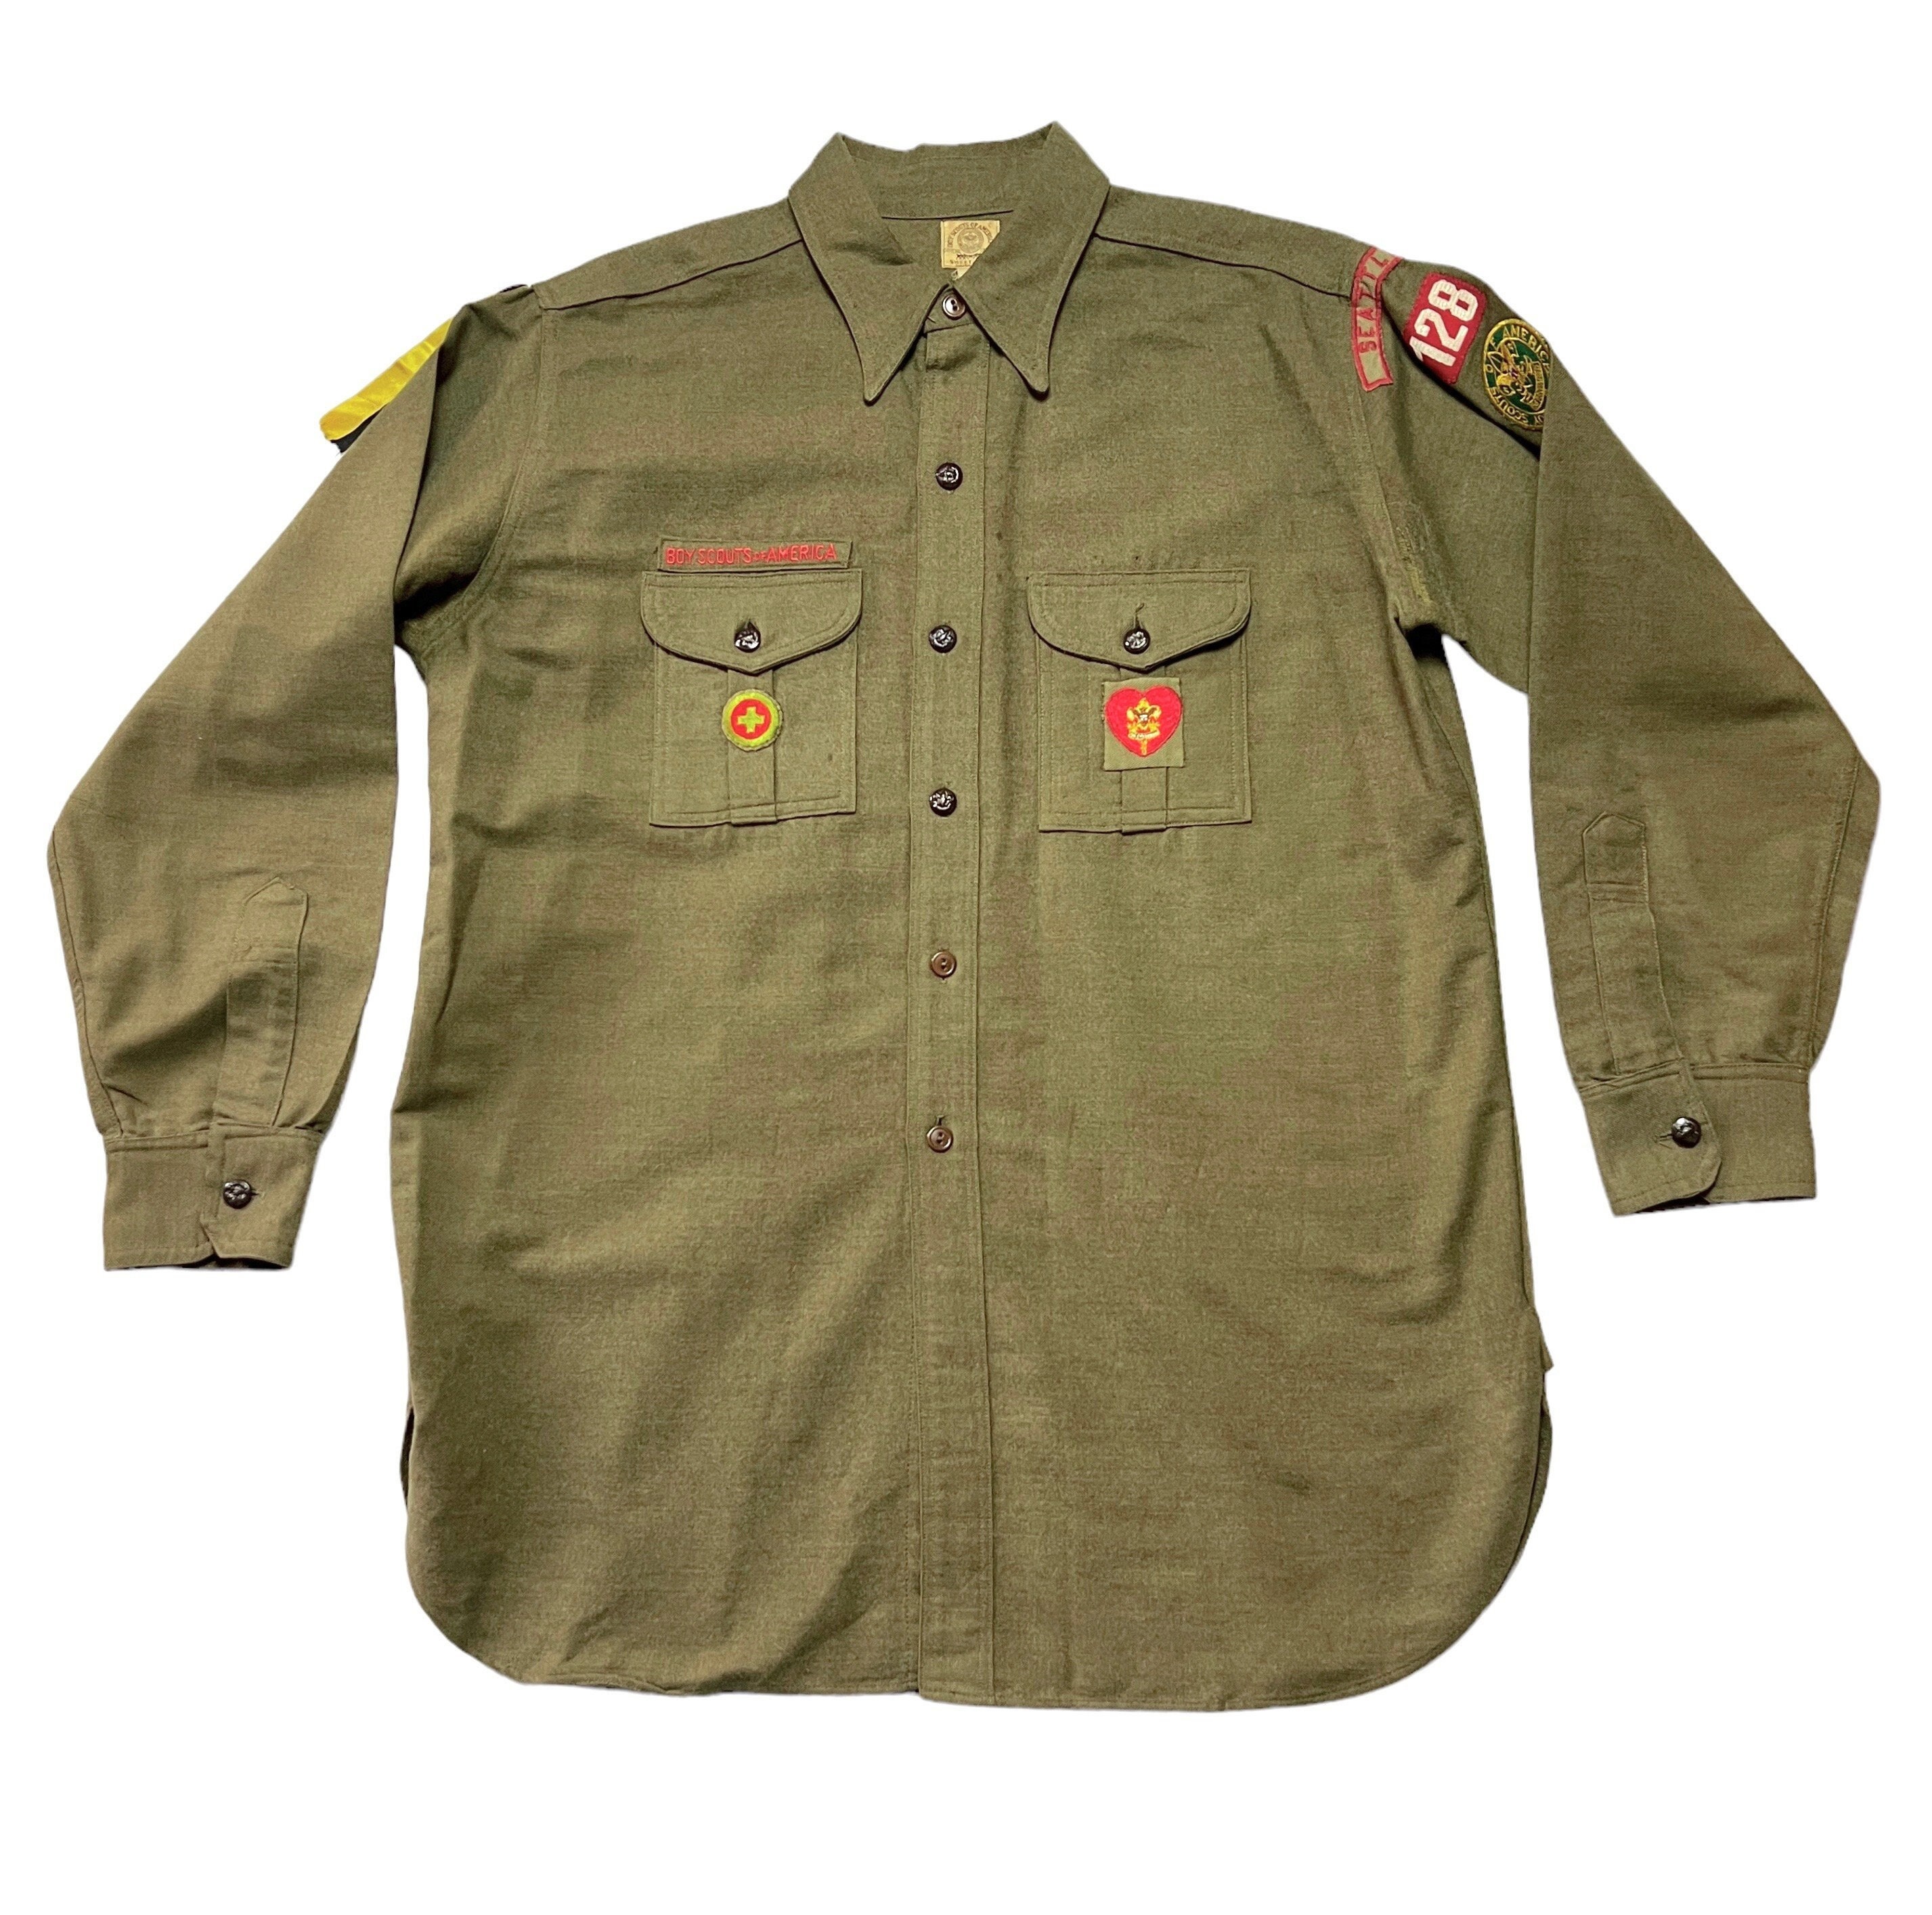 Boy Scout Uniform 1970s Shirt Pants Patches Scarf Star Musician Michigan  BSA Vtg